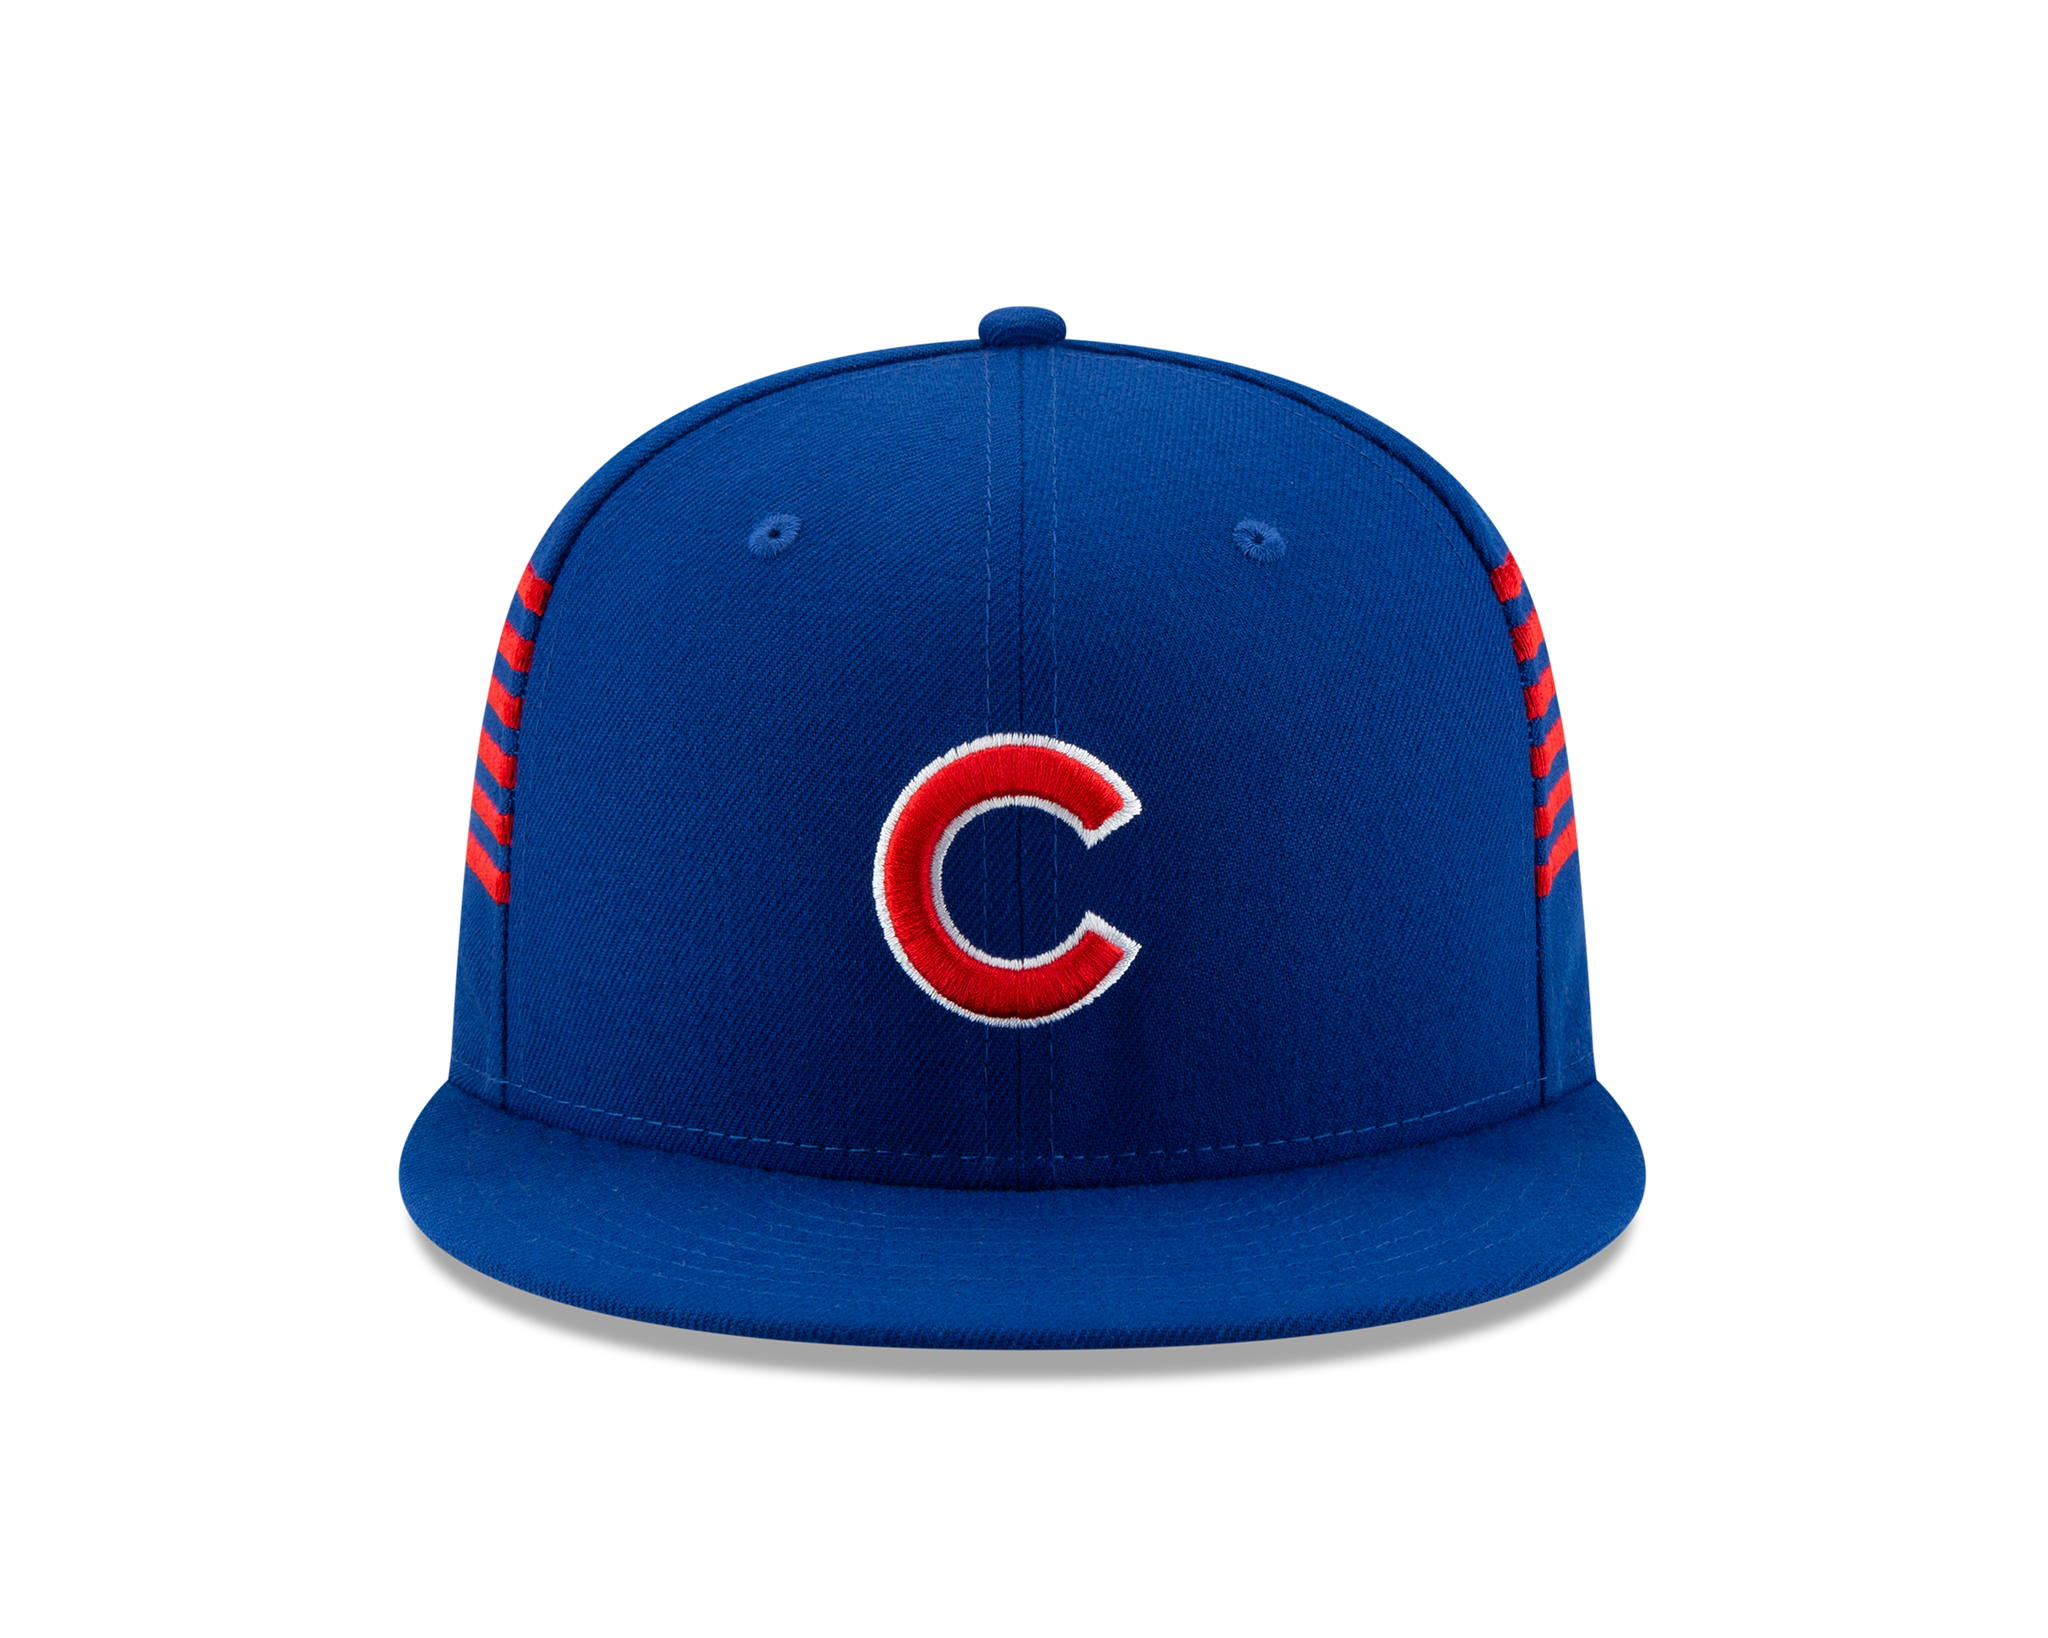 cubs baseball hat